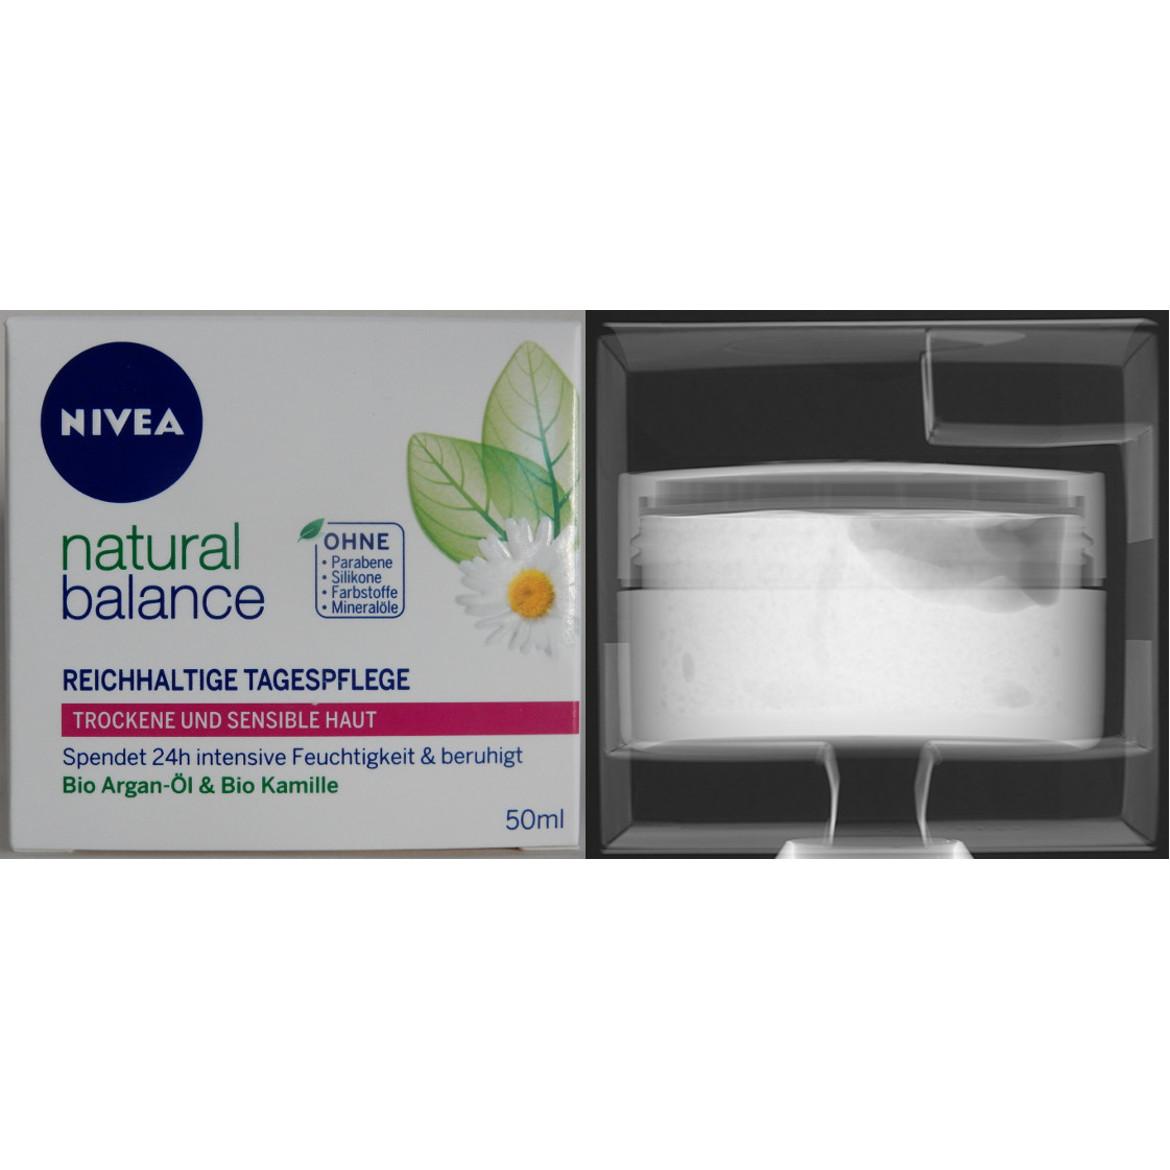 Luftpackungen: Nivea Natural Balance mit Röntgenbild